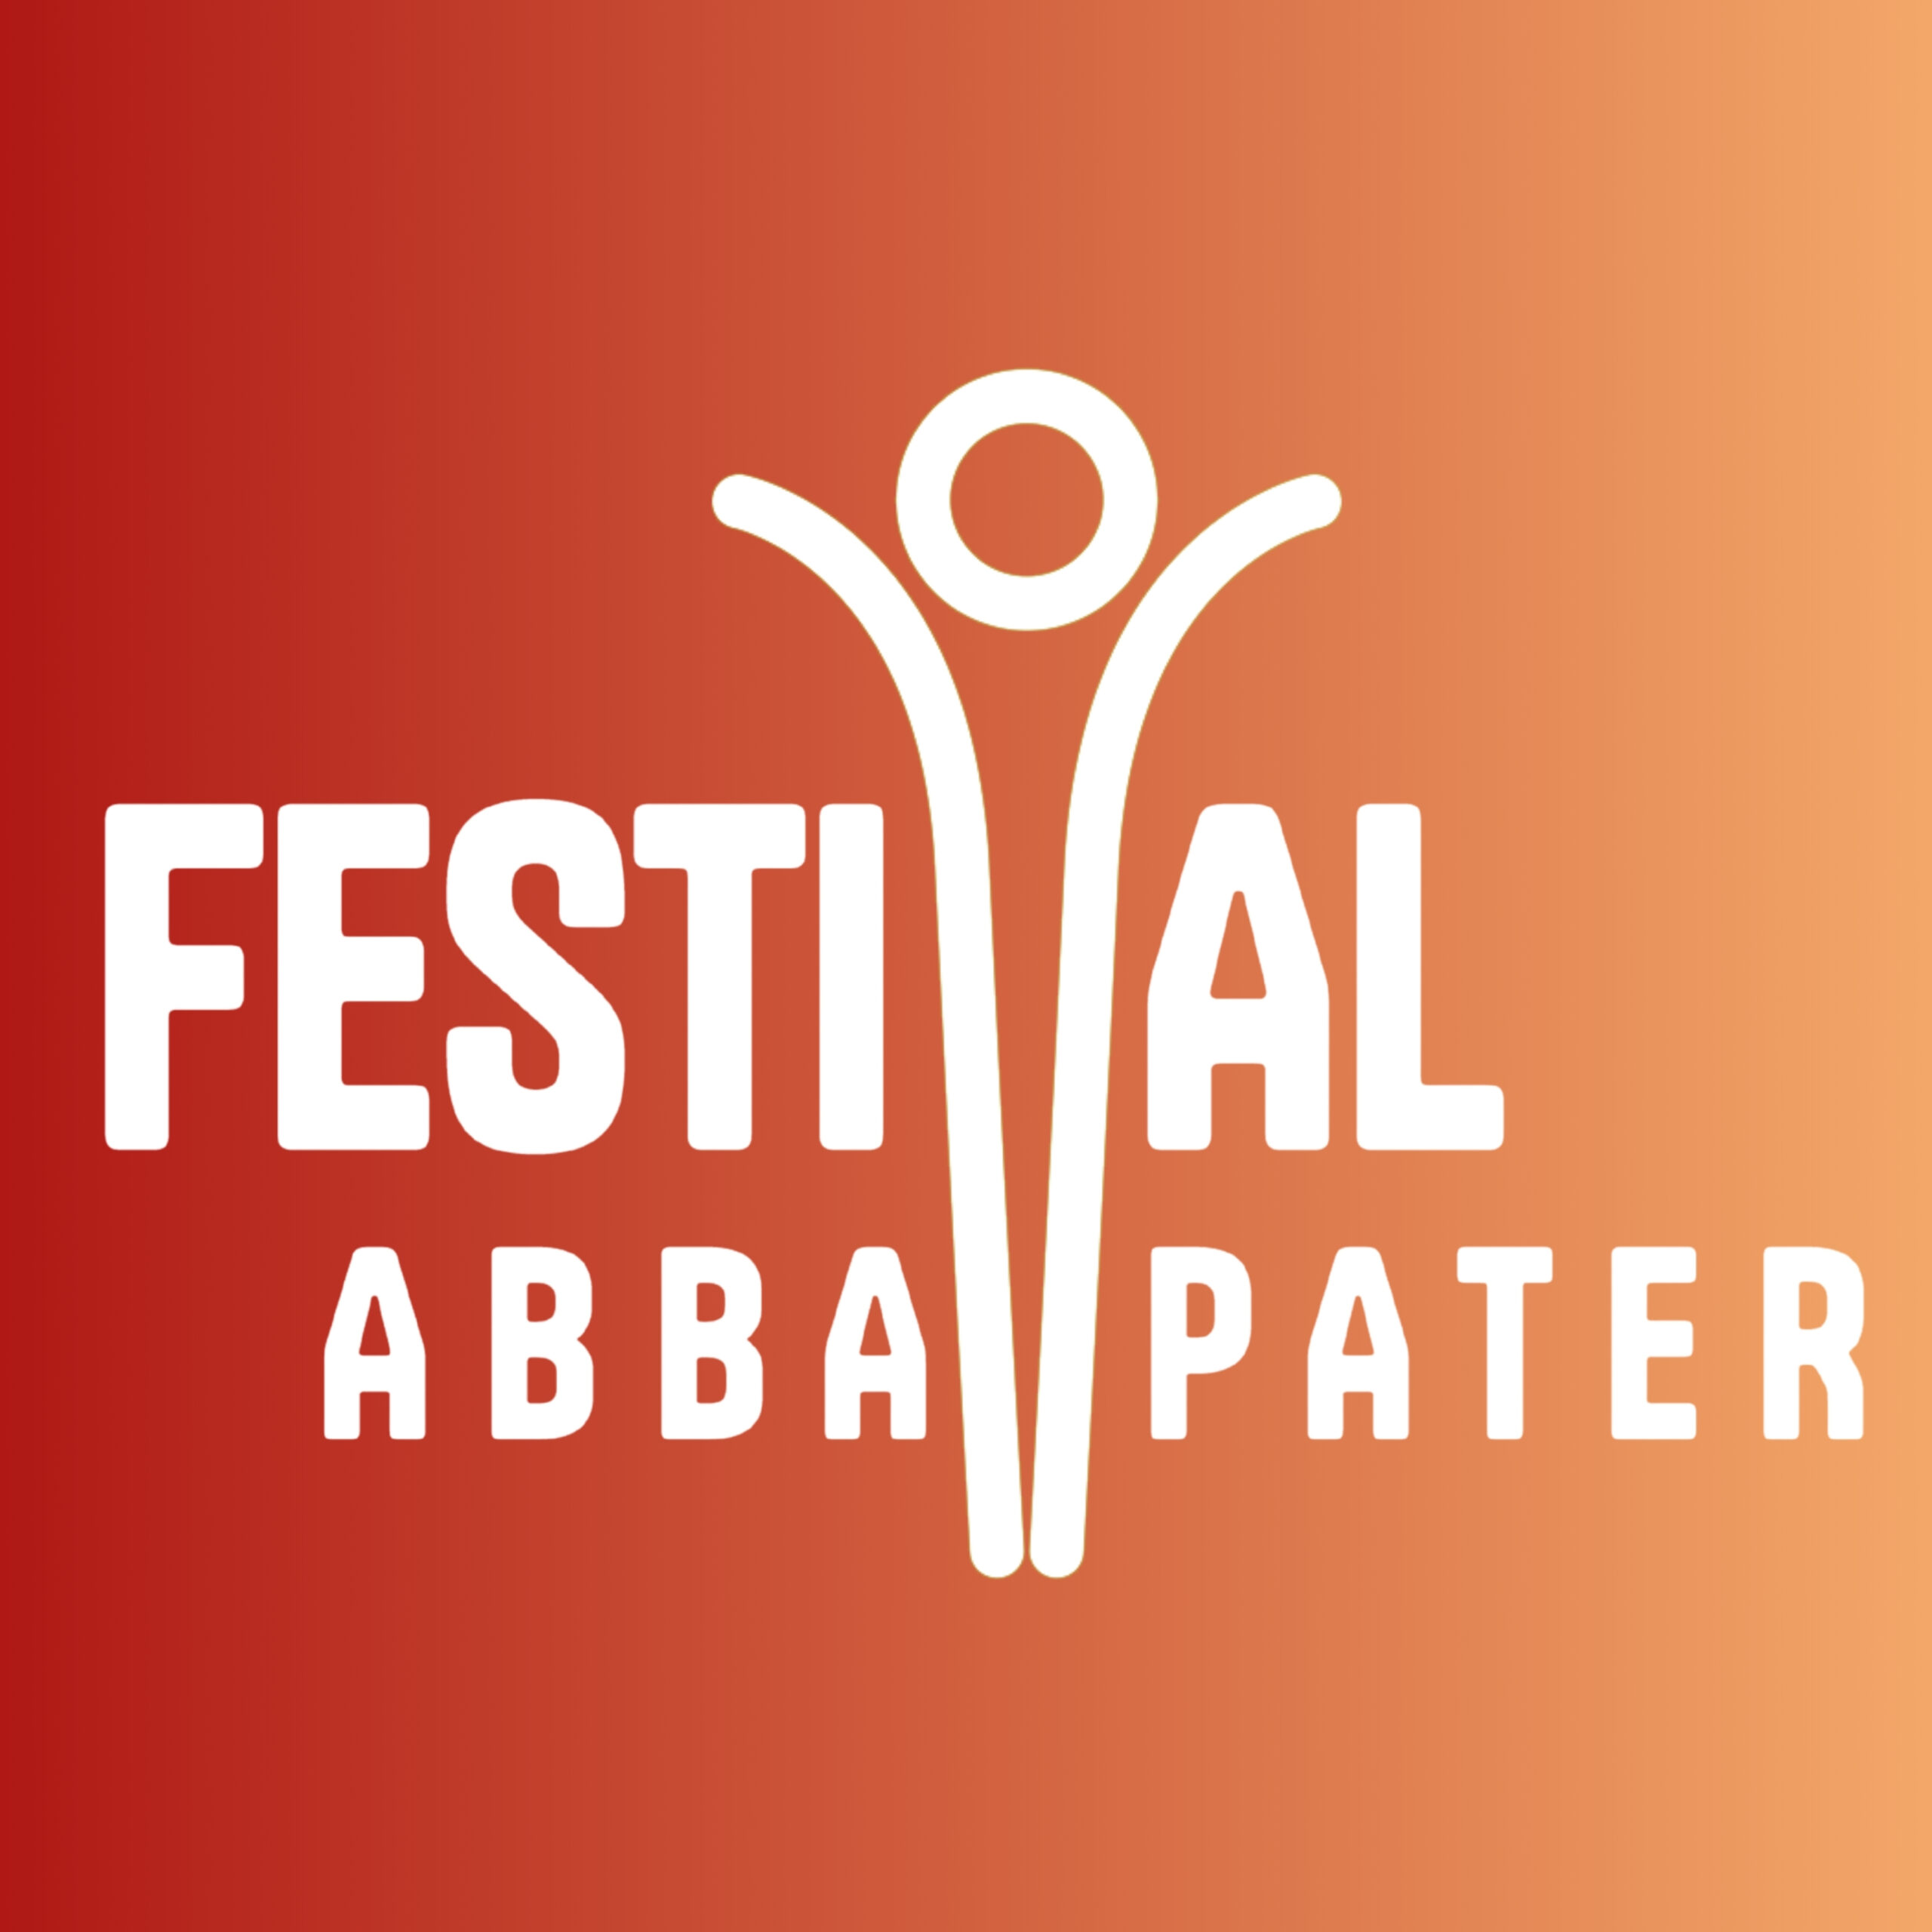 Festiwal Abba Pater